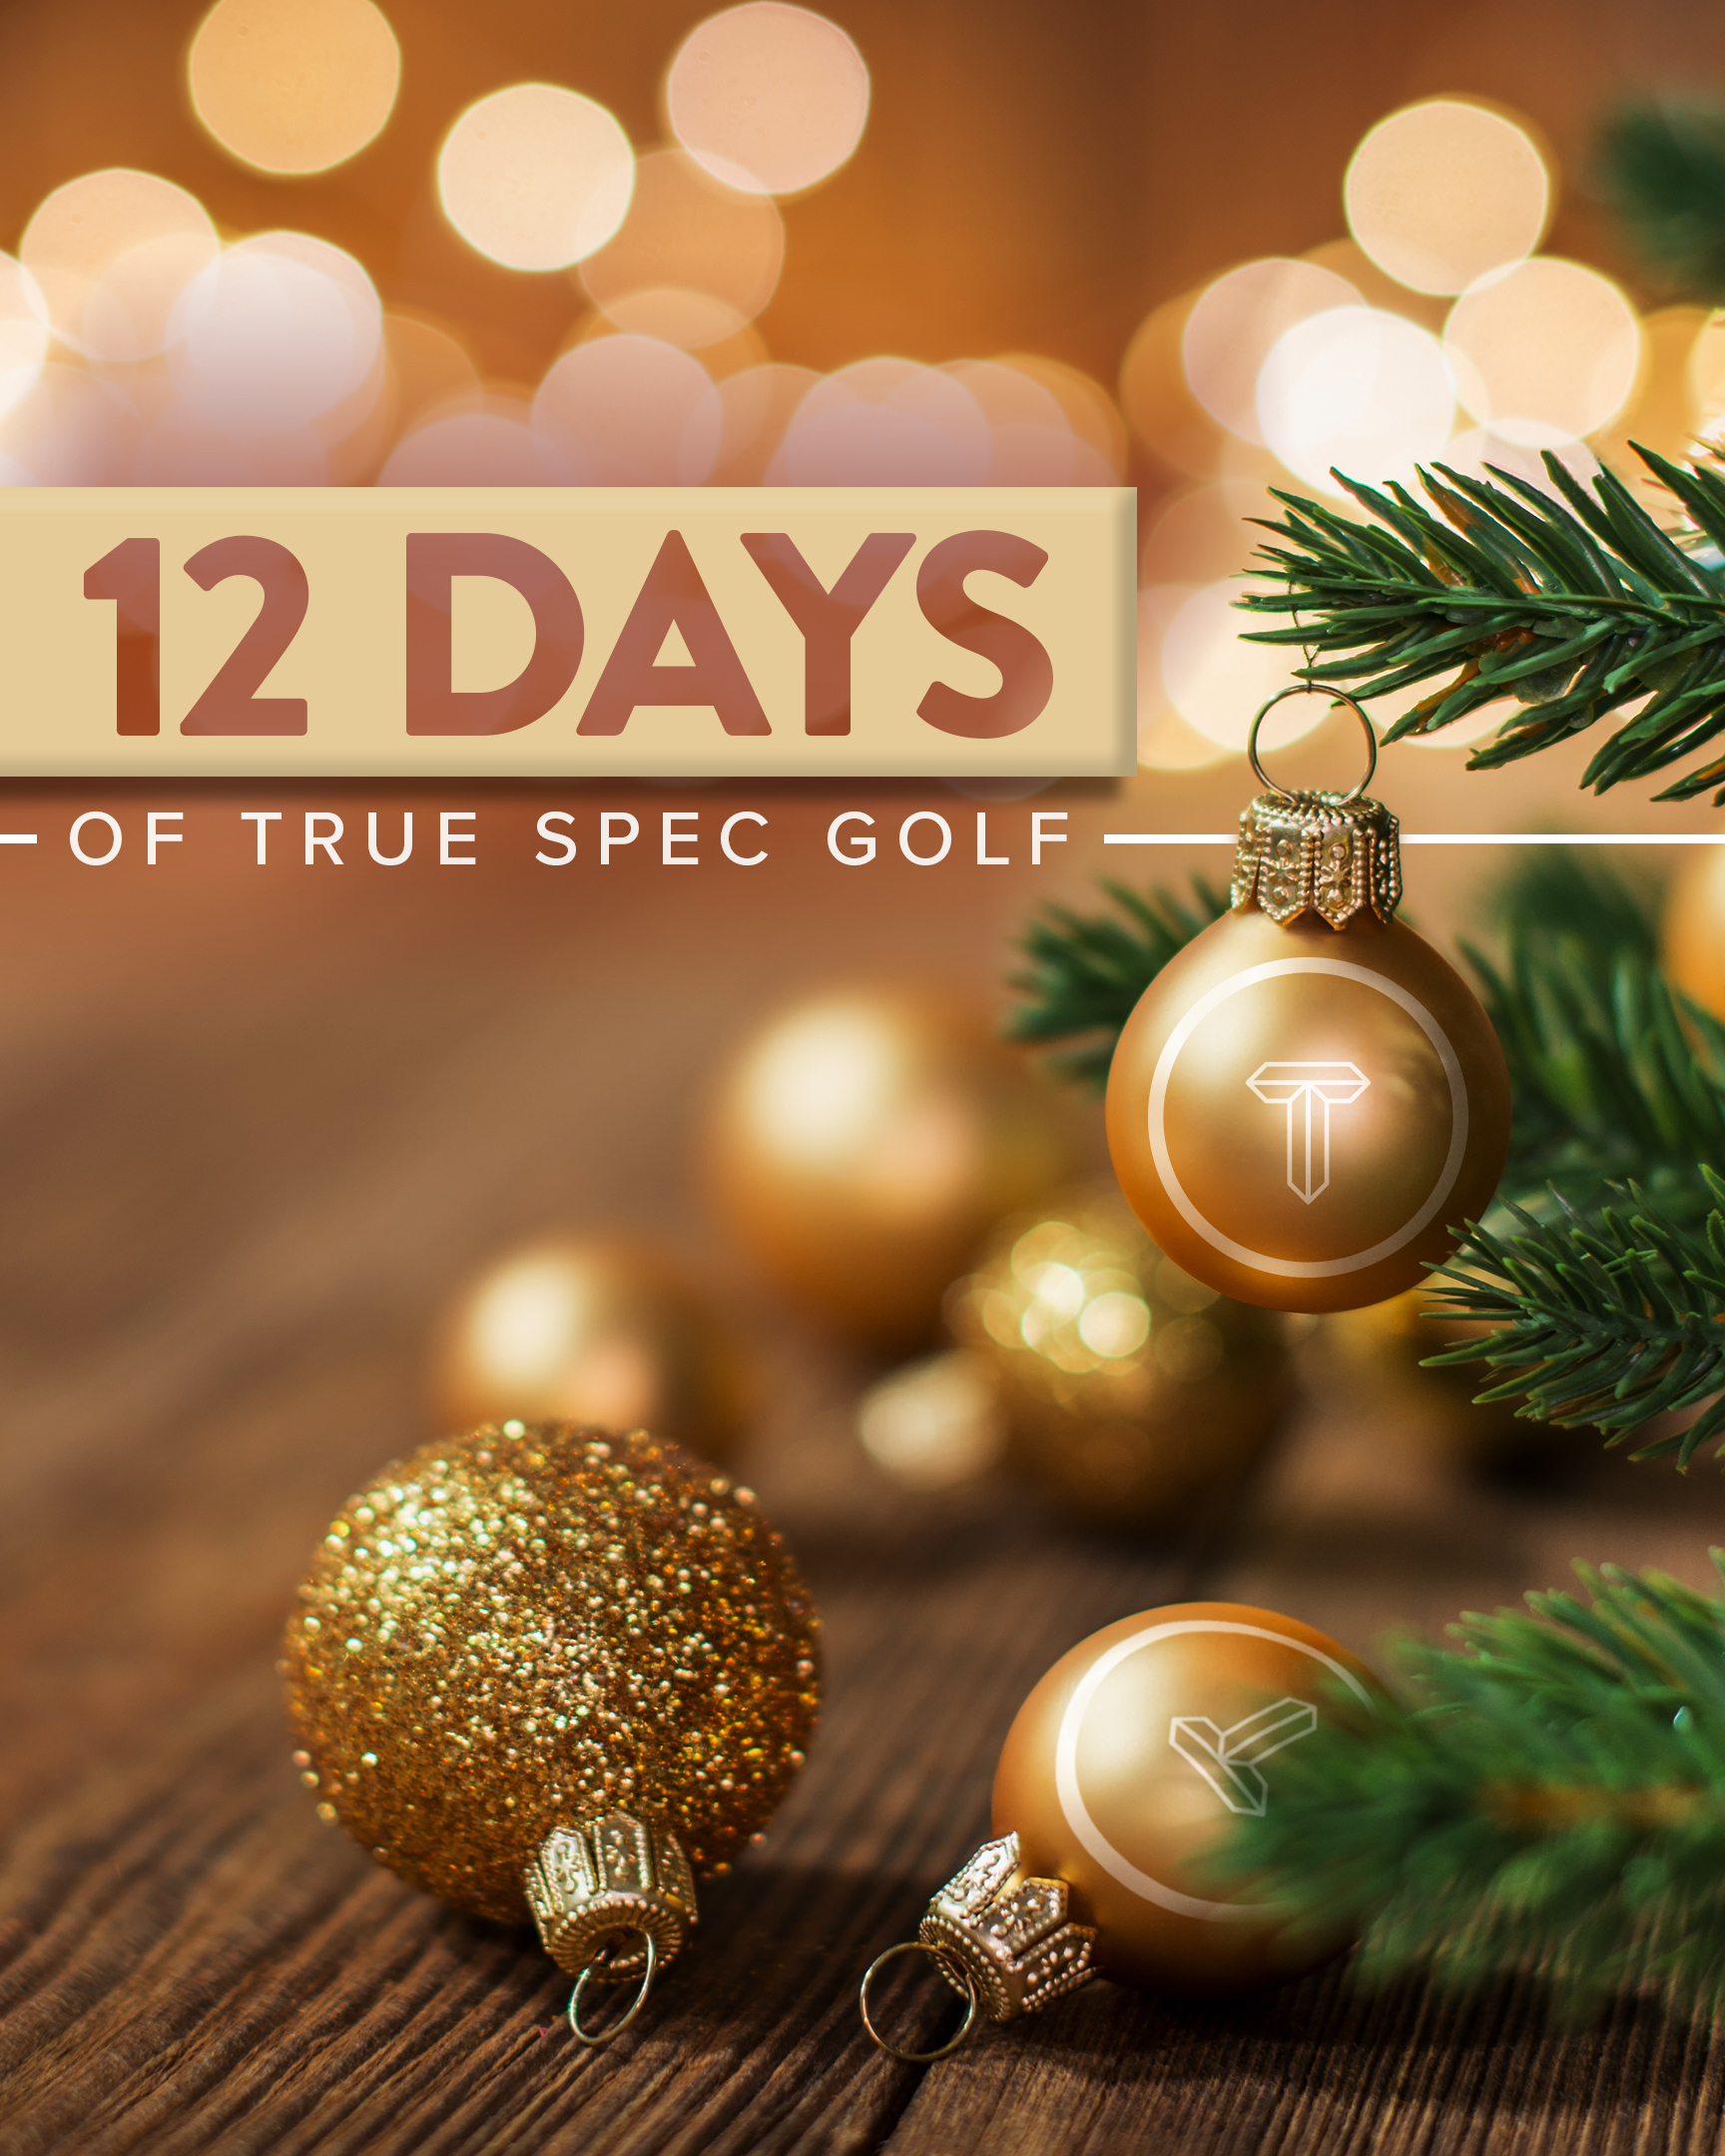 12 Days of True Spec Golf